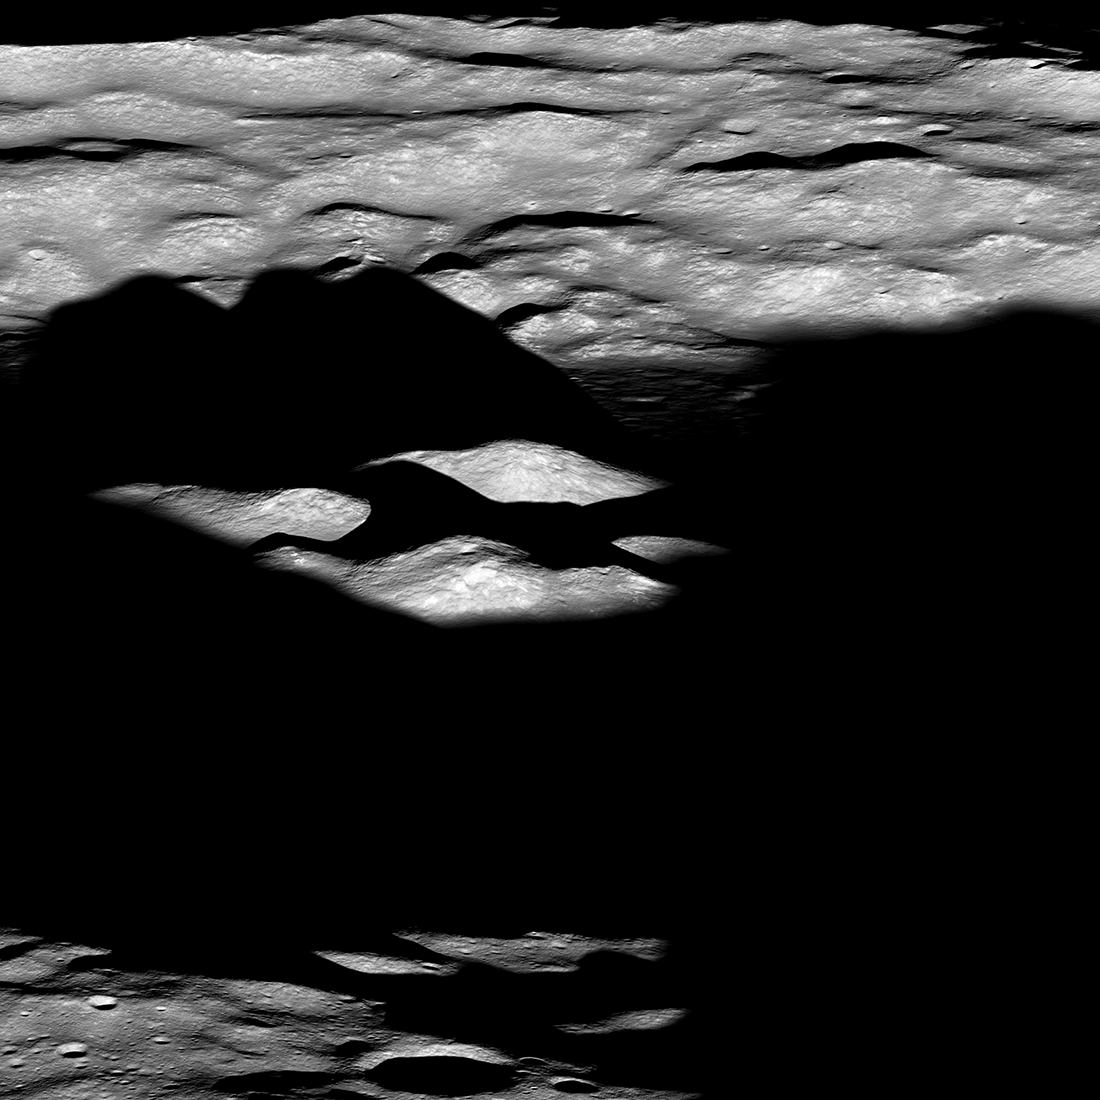 Moon's Bhabha crater.